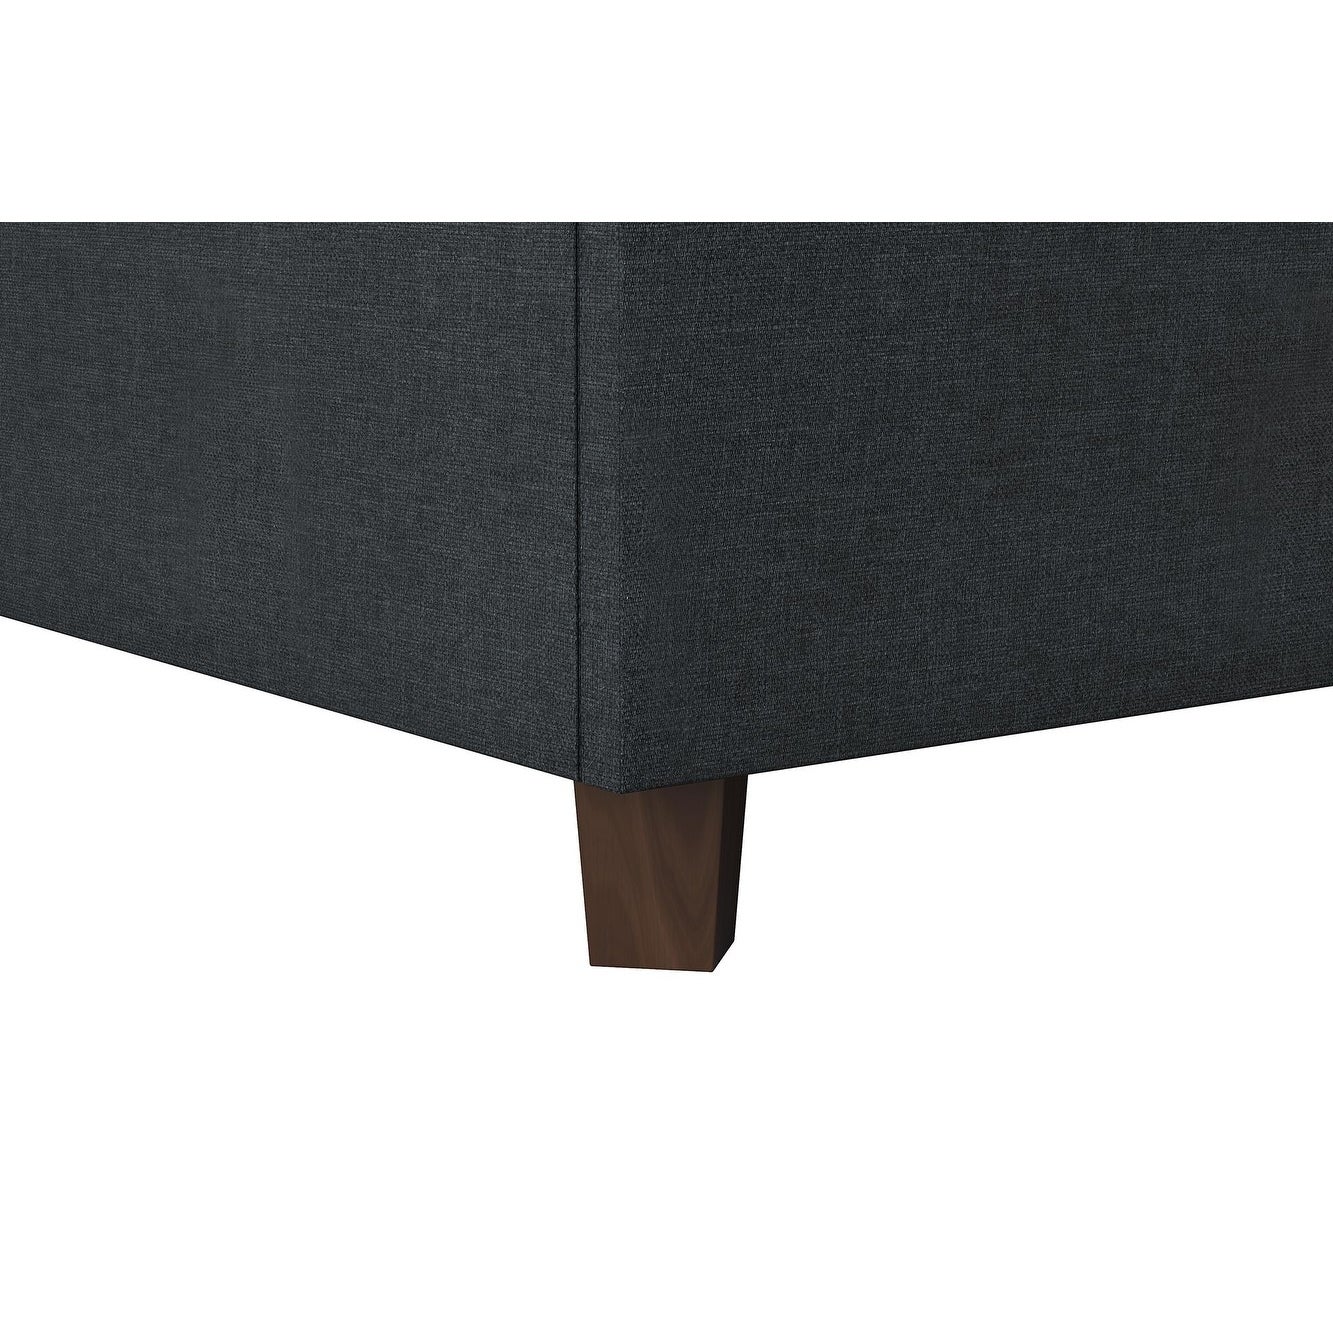 Kingbird Furniture Company Microfiber Couch Ashley Furniture-1 12